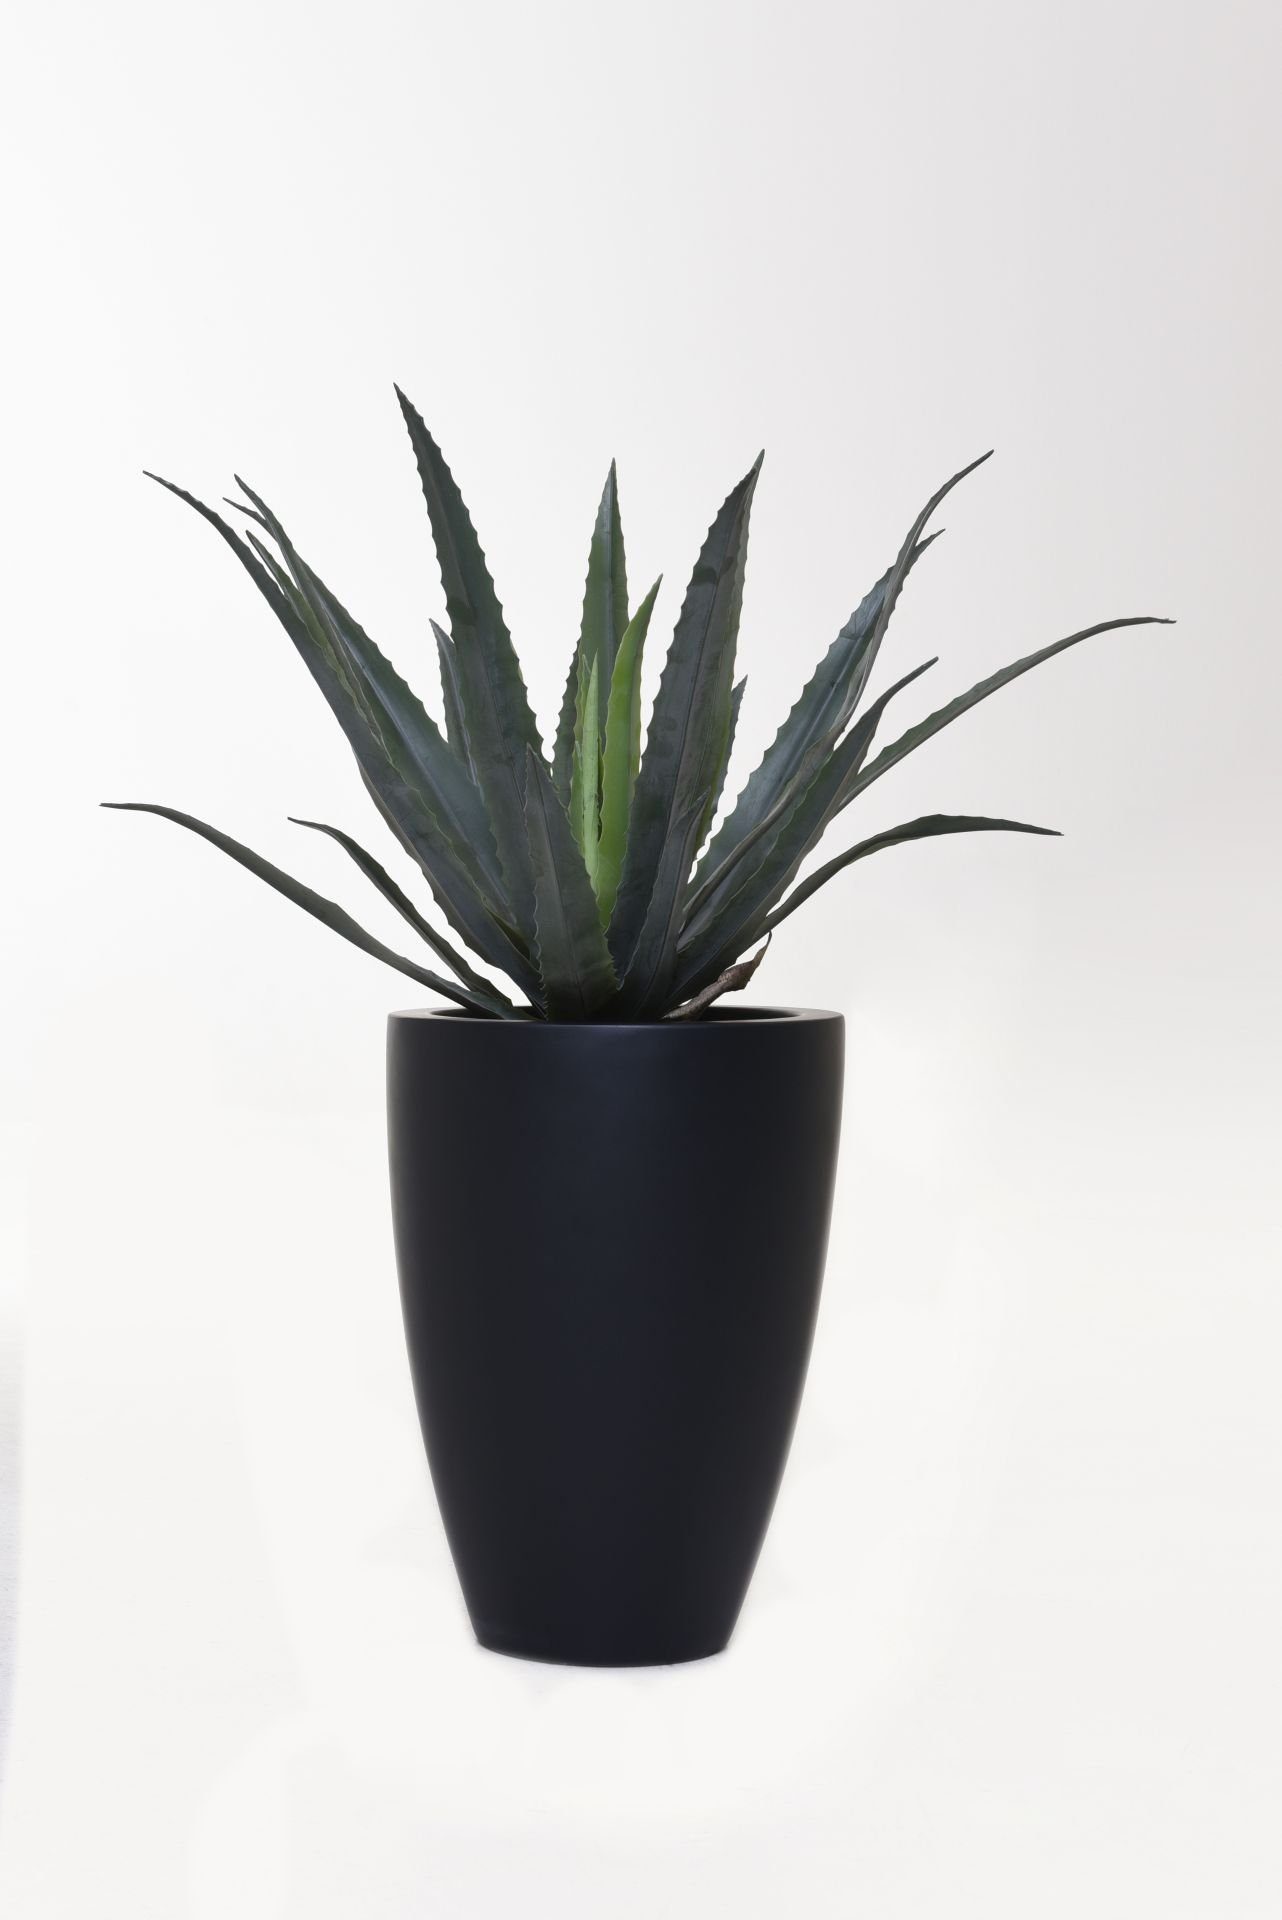 AGAVO Höhe Agave Kunstpflanze VIVANNO, cm cm, 67 65x67 künstliche Kunstpflanze im Kunststoff Topf -